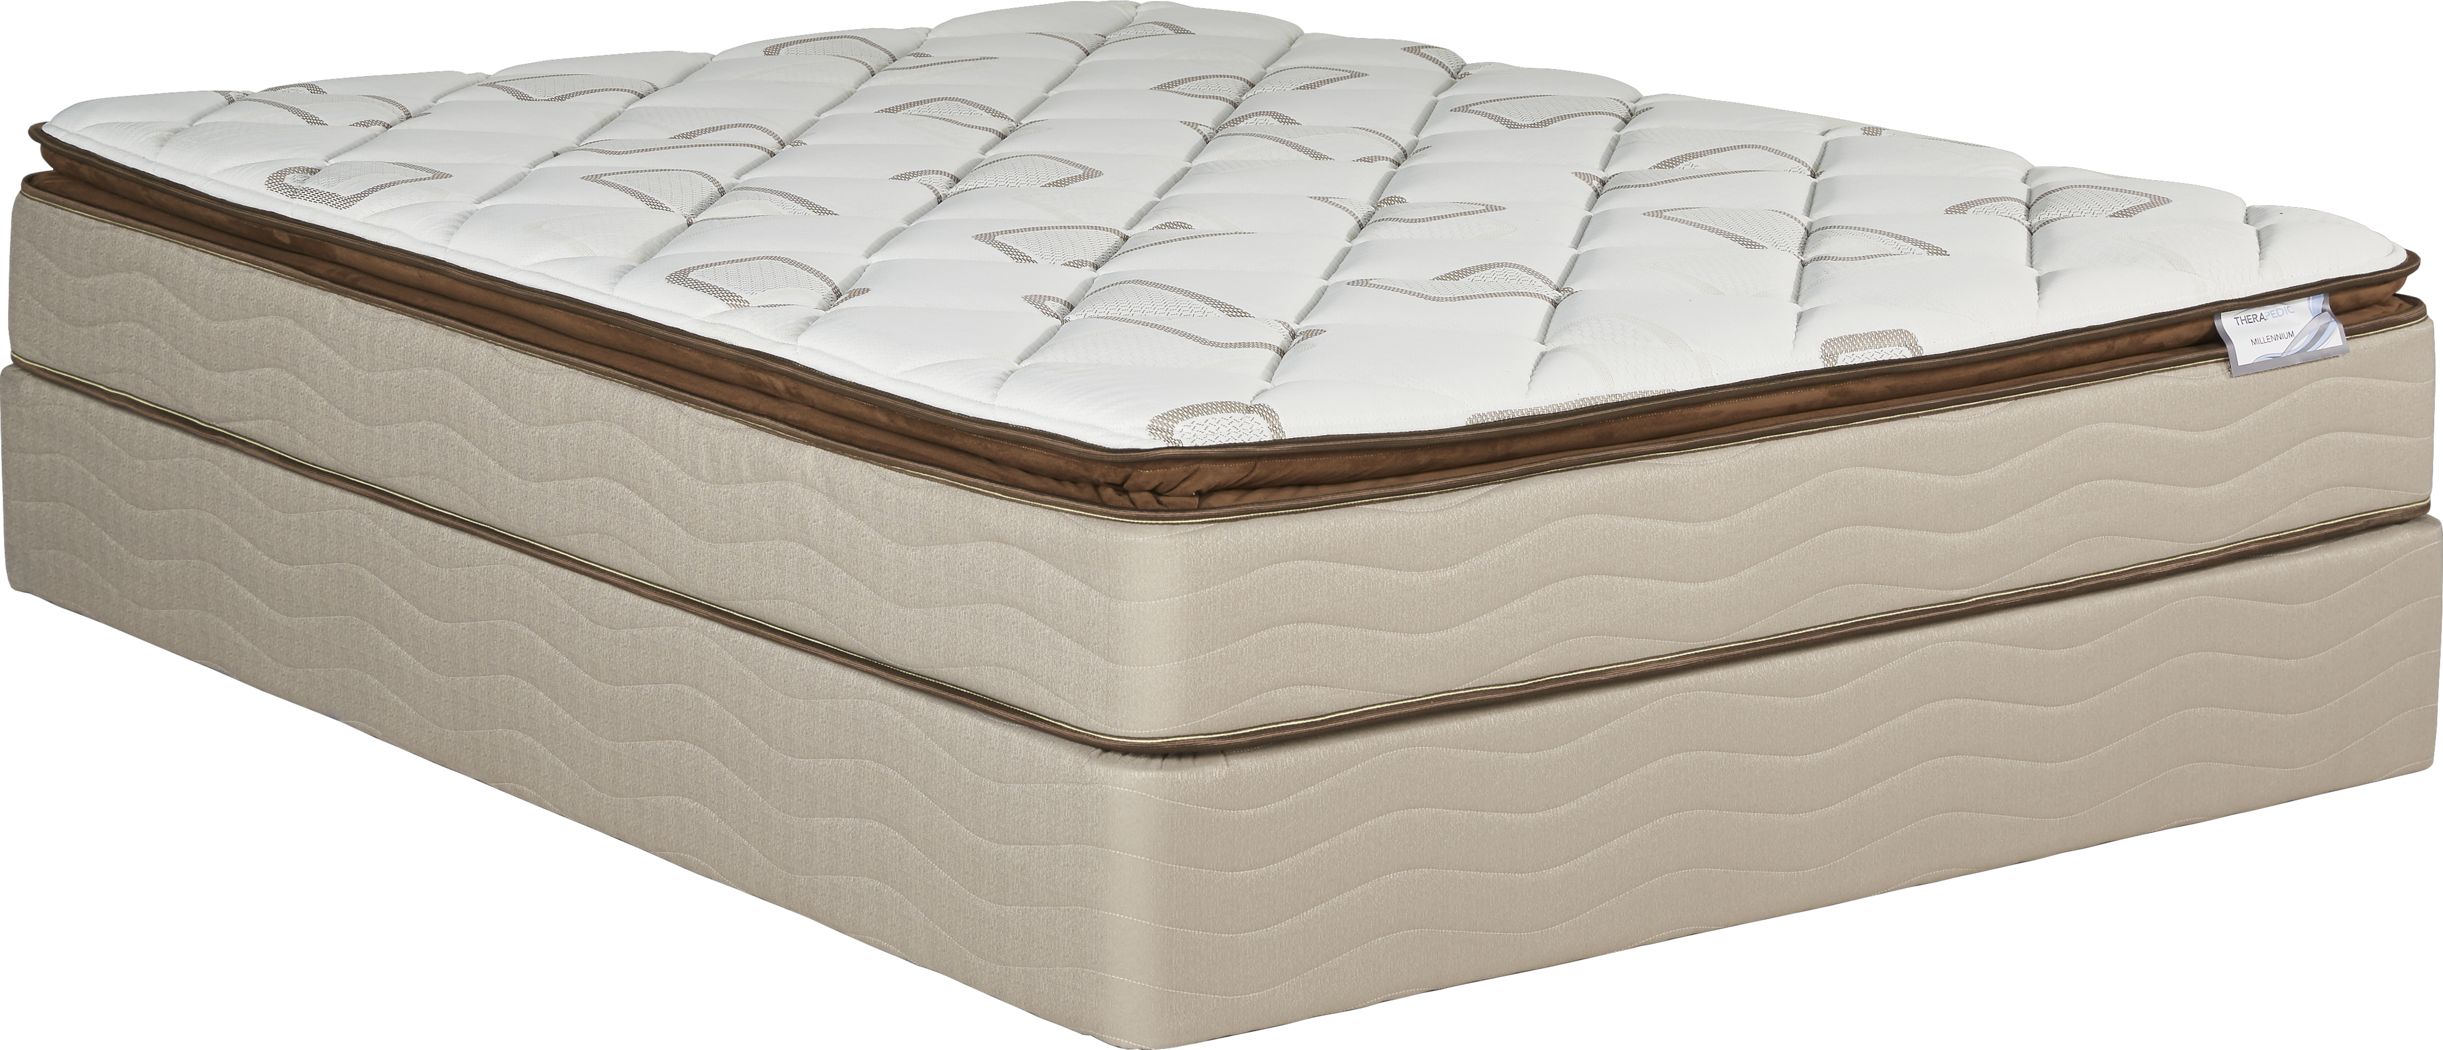 therapedic berkeley queen mattress set review